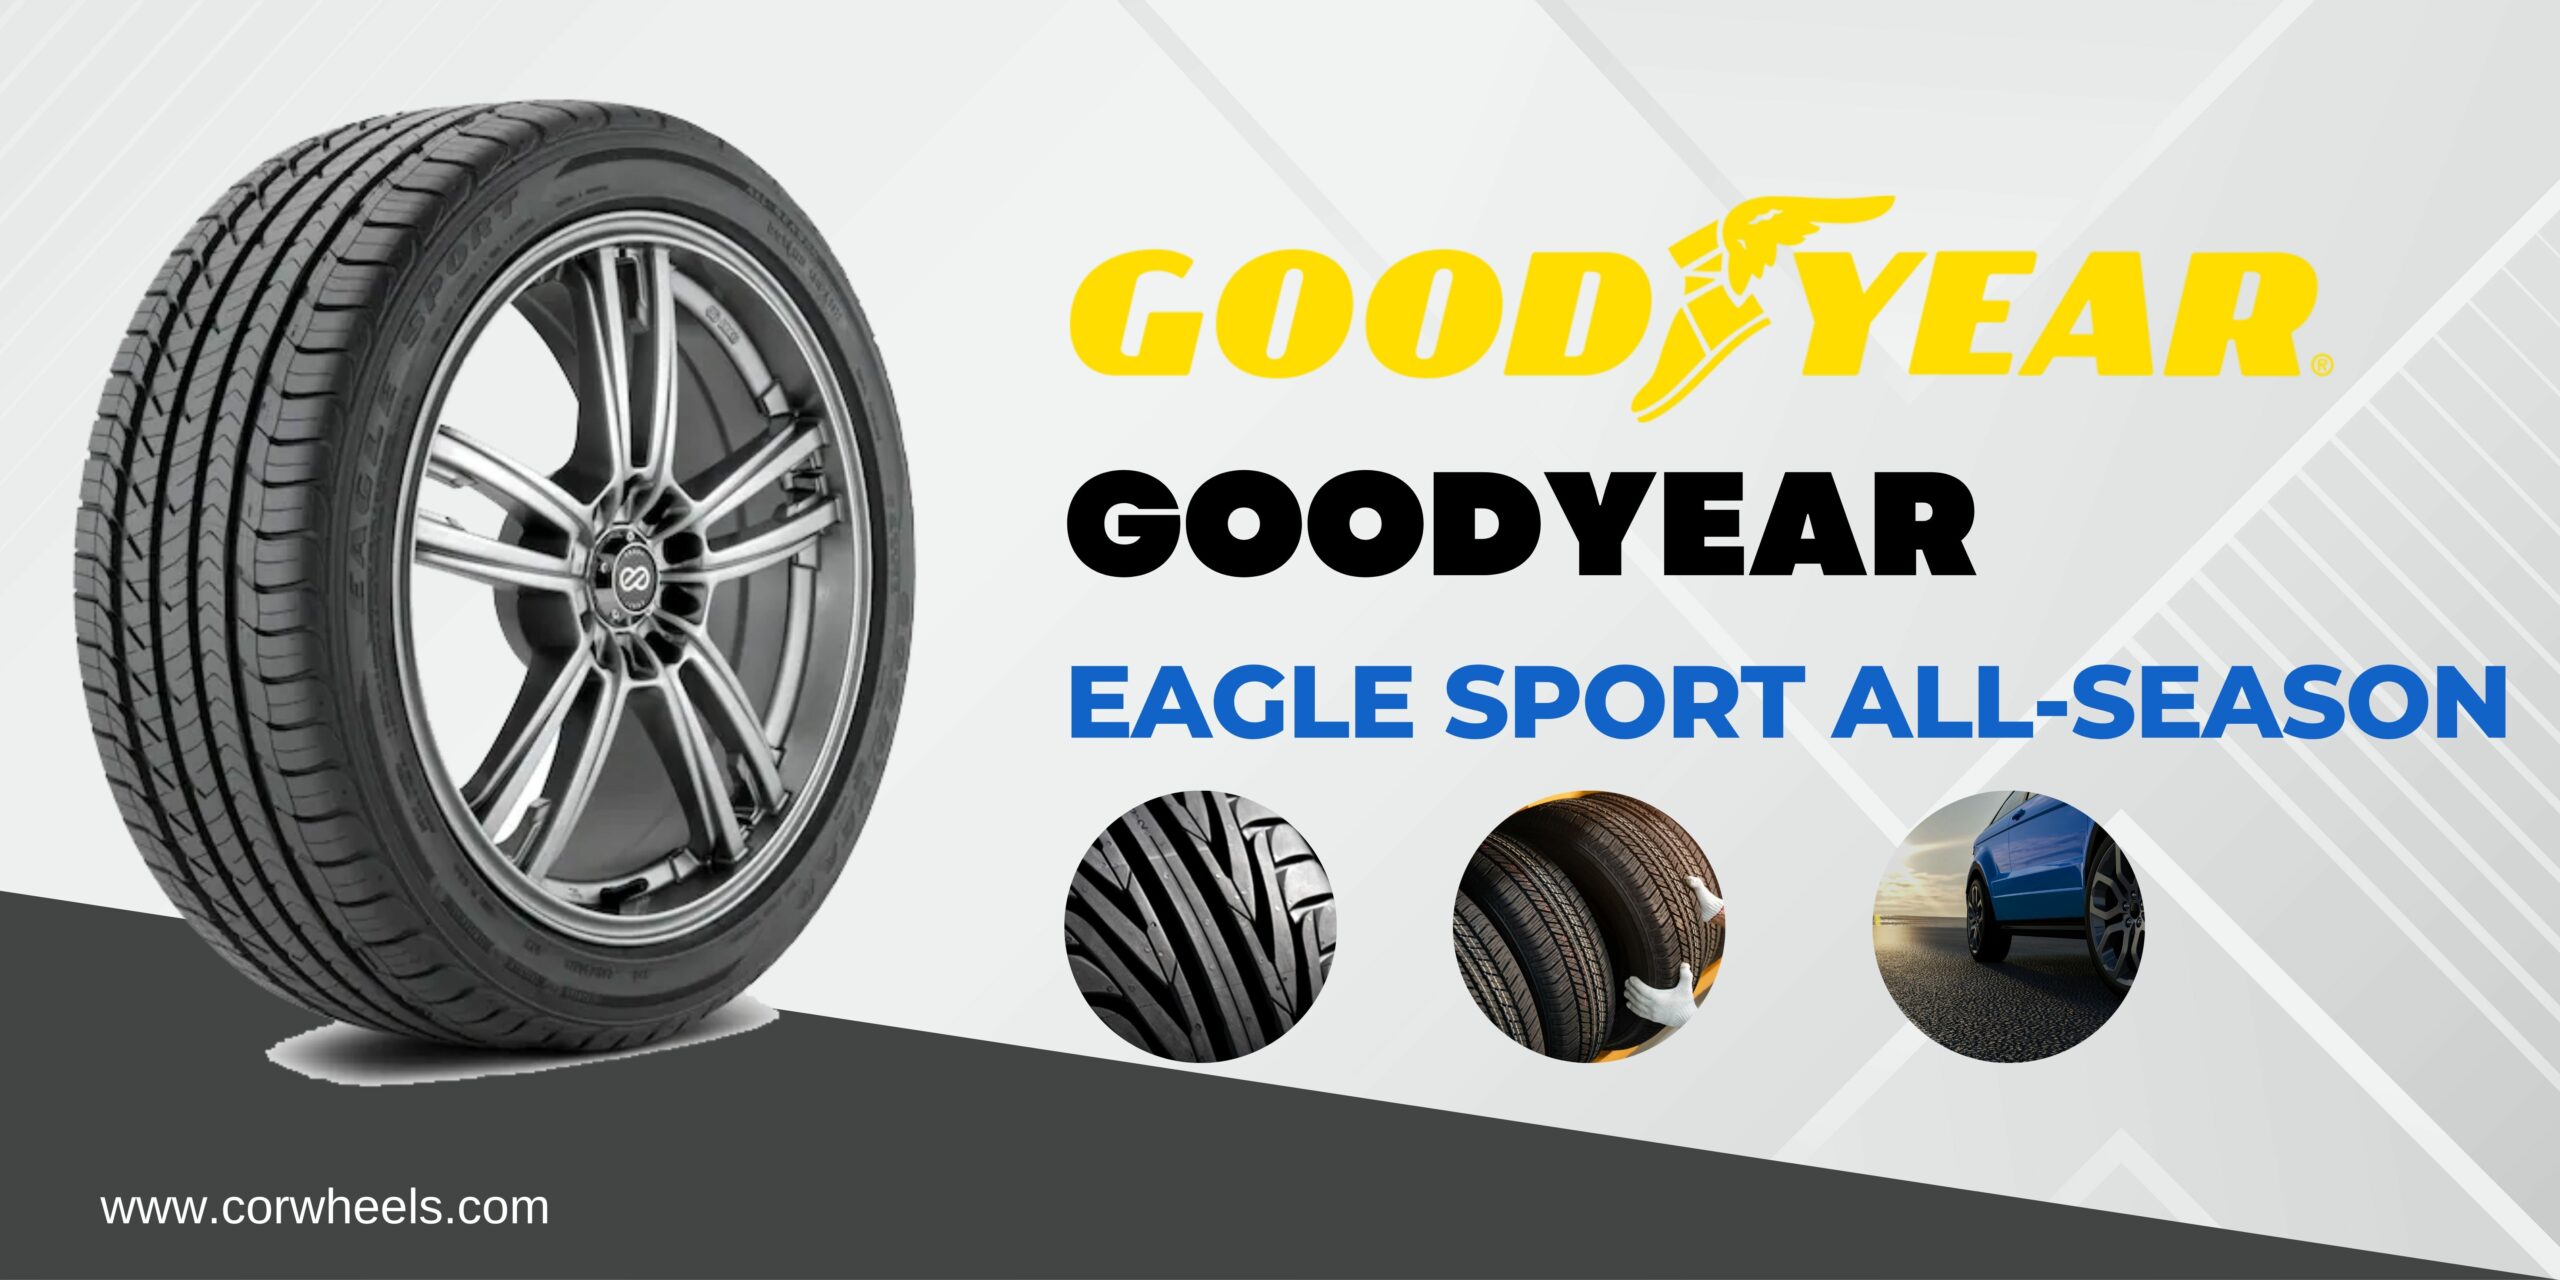 Goodyear Eagle Sport All-Season review